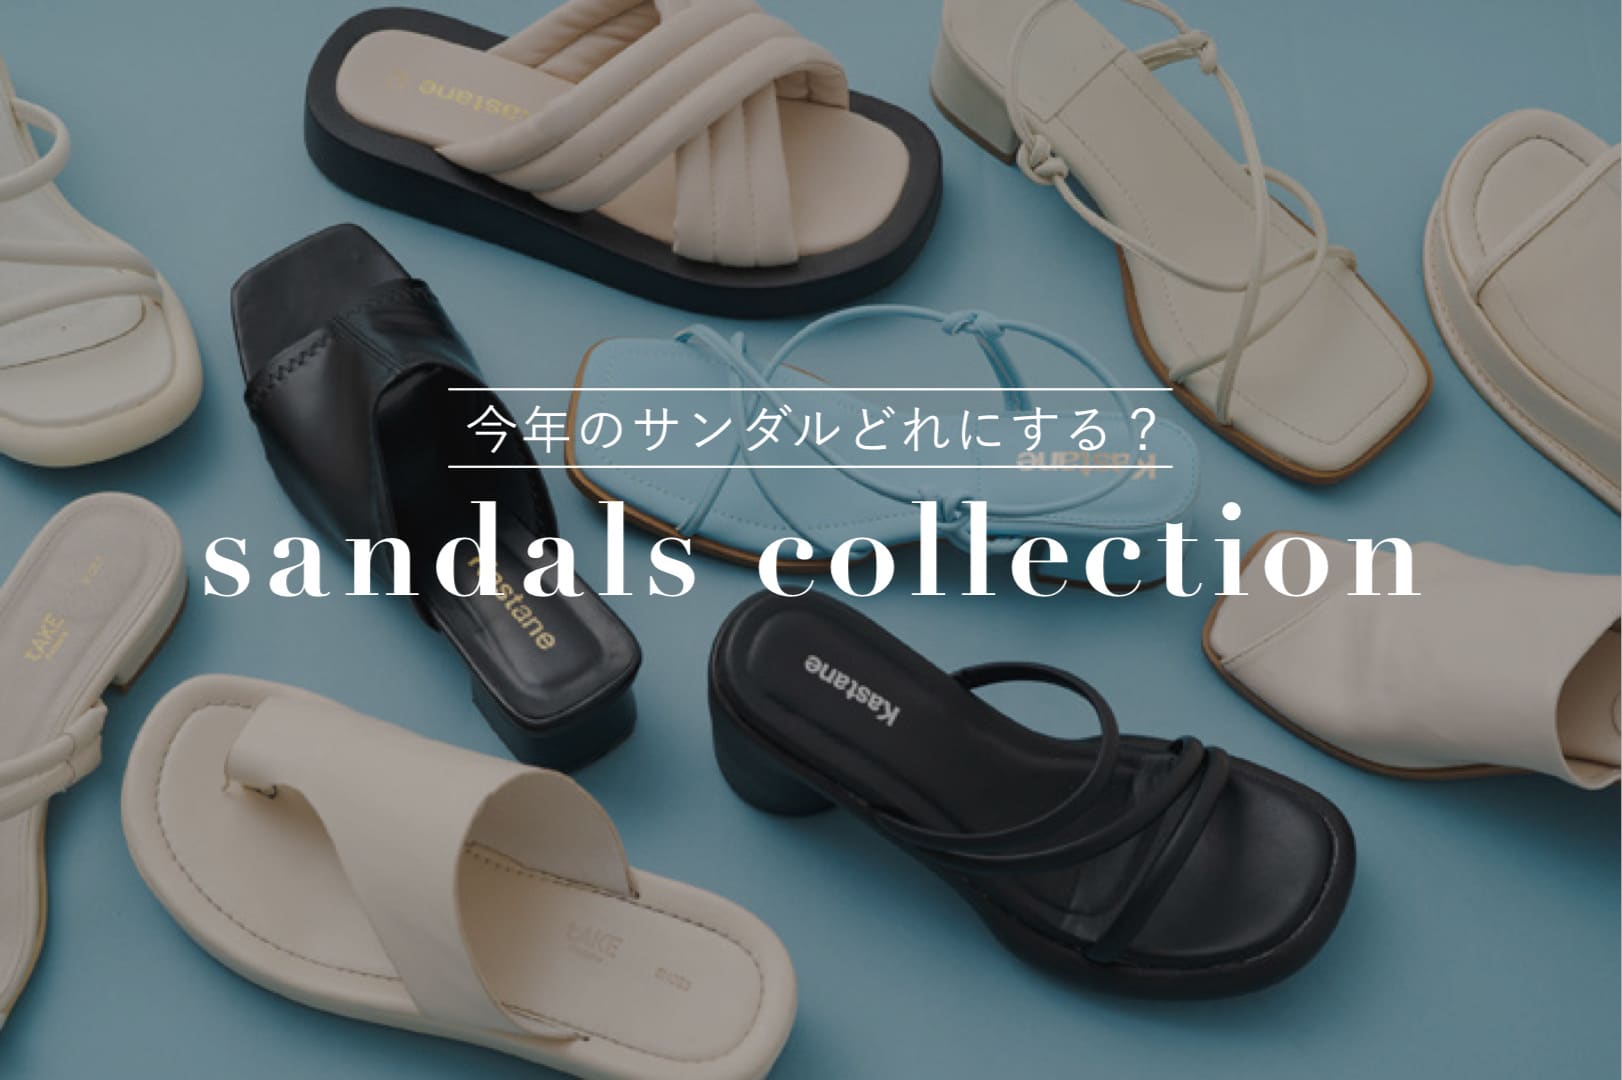 Kastane sandals collection - サンダル9型徹底比較 -